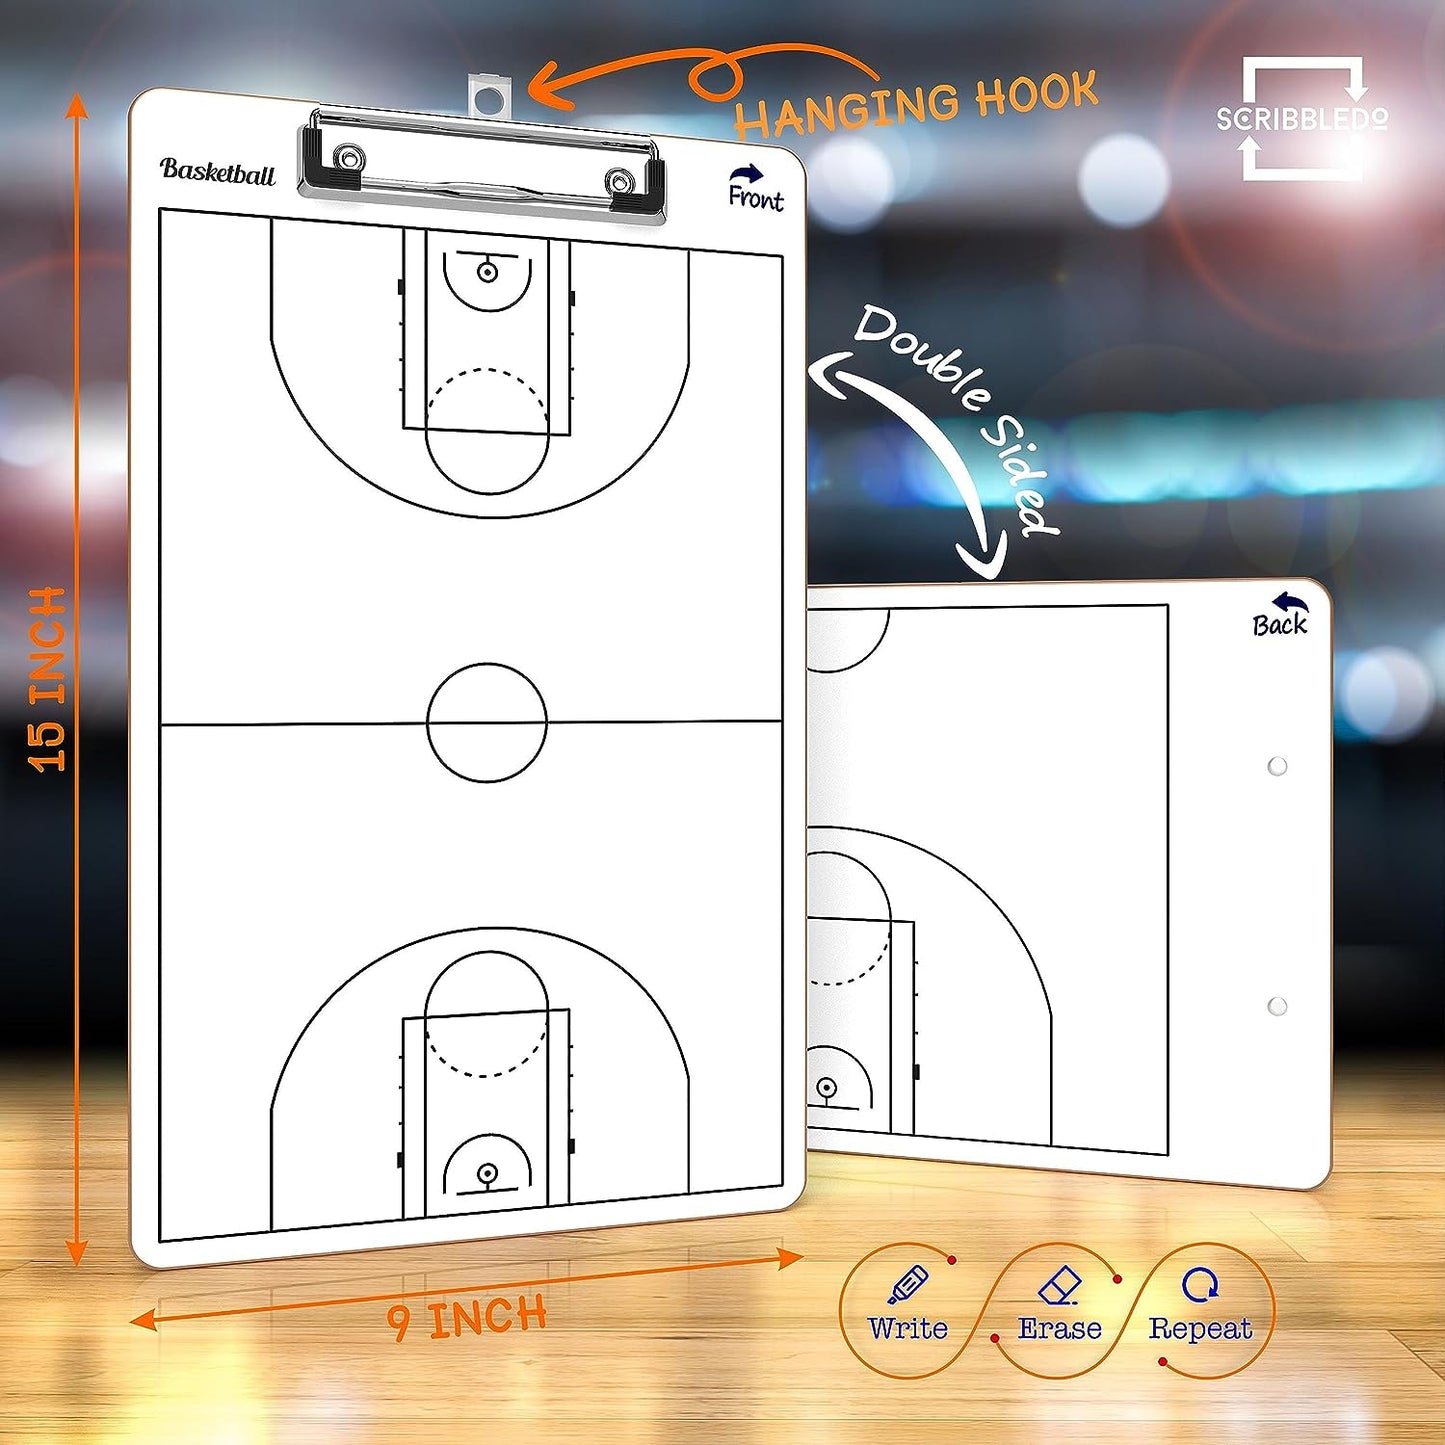 basketball court explanation clipboard 15"x9"